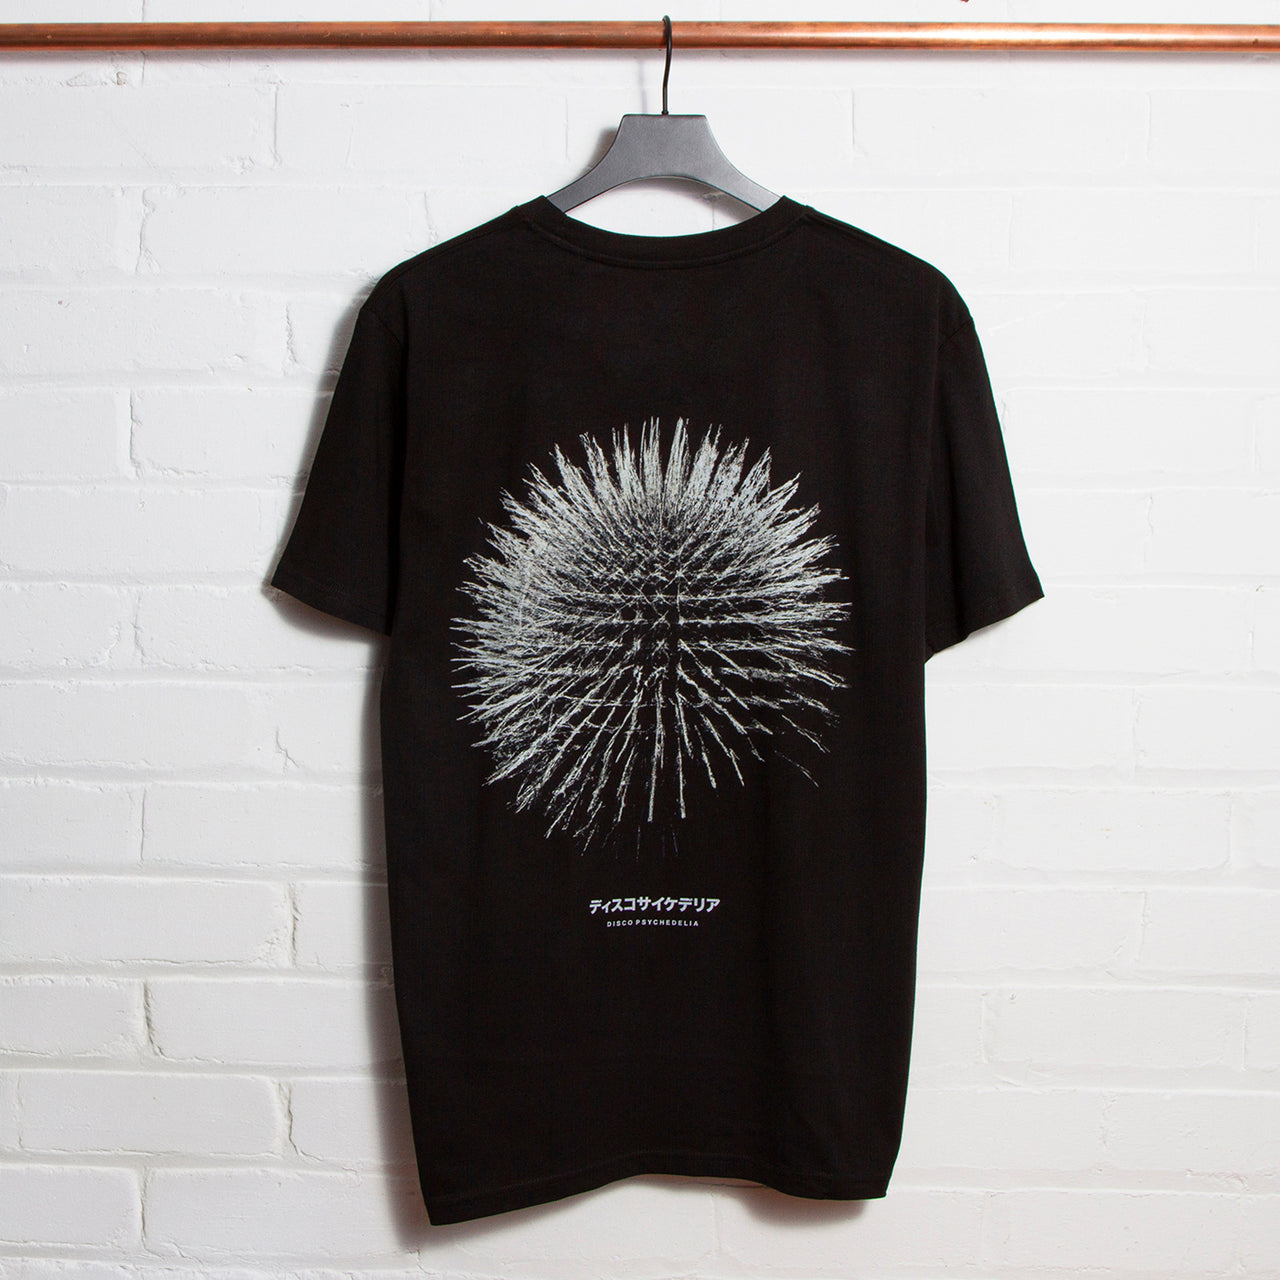 Orb 003 Disco Psychedelia Back Print - Tshirt - Black